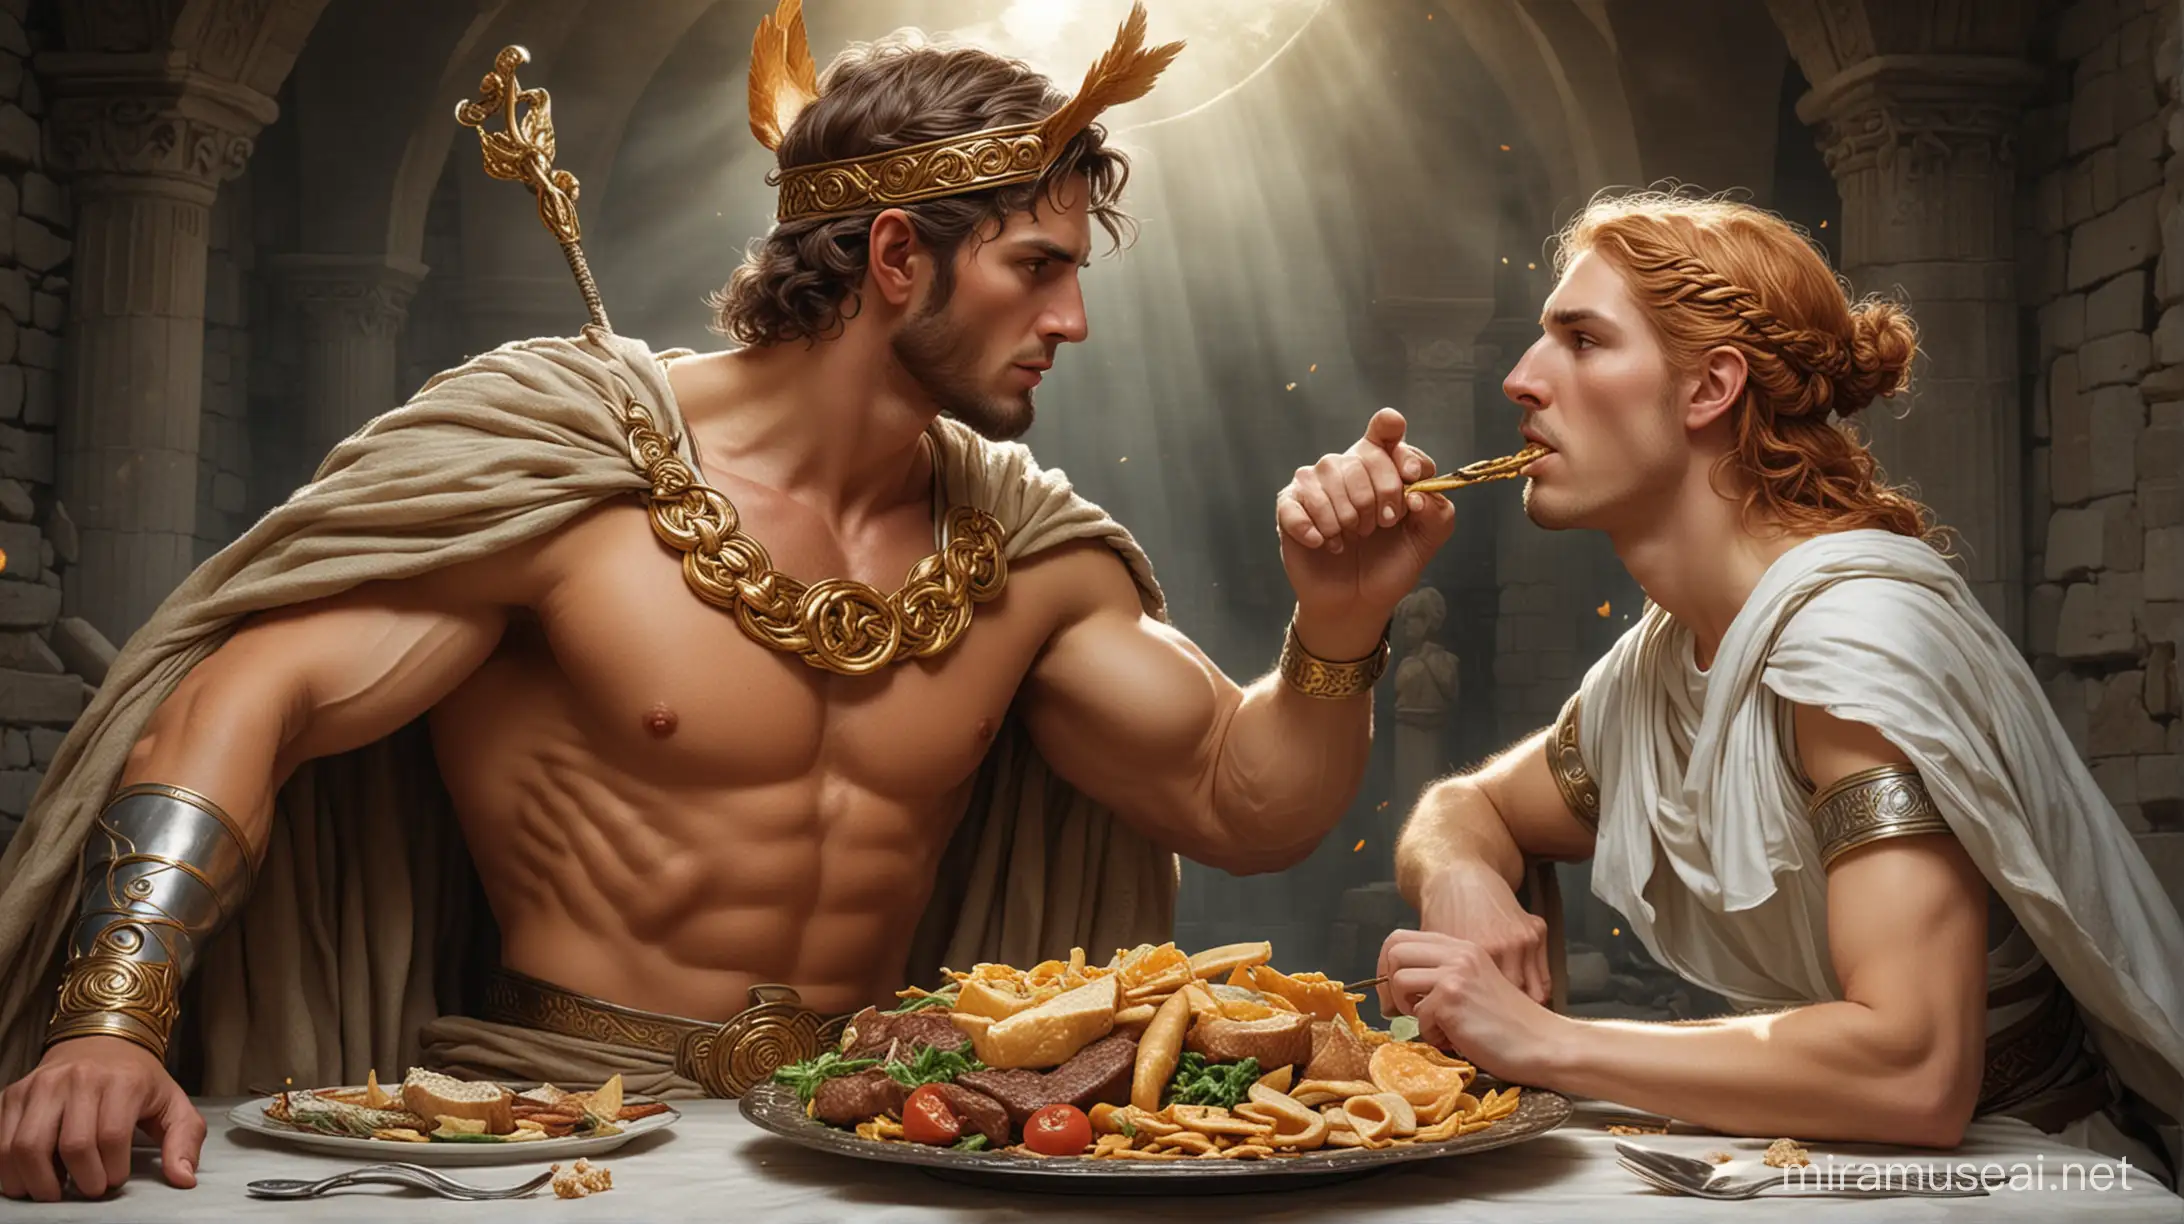 Mythological Gods Hermes and Lugh Sharing a Feast